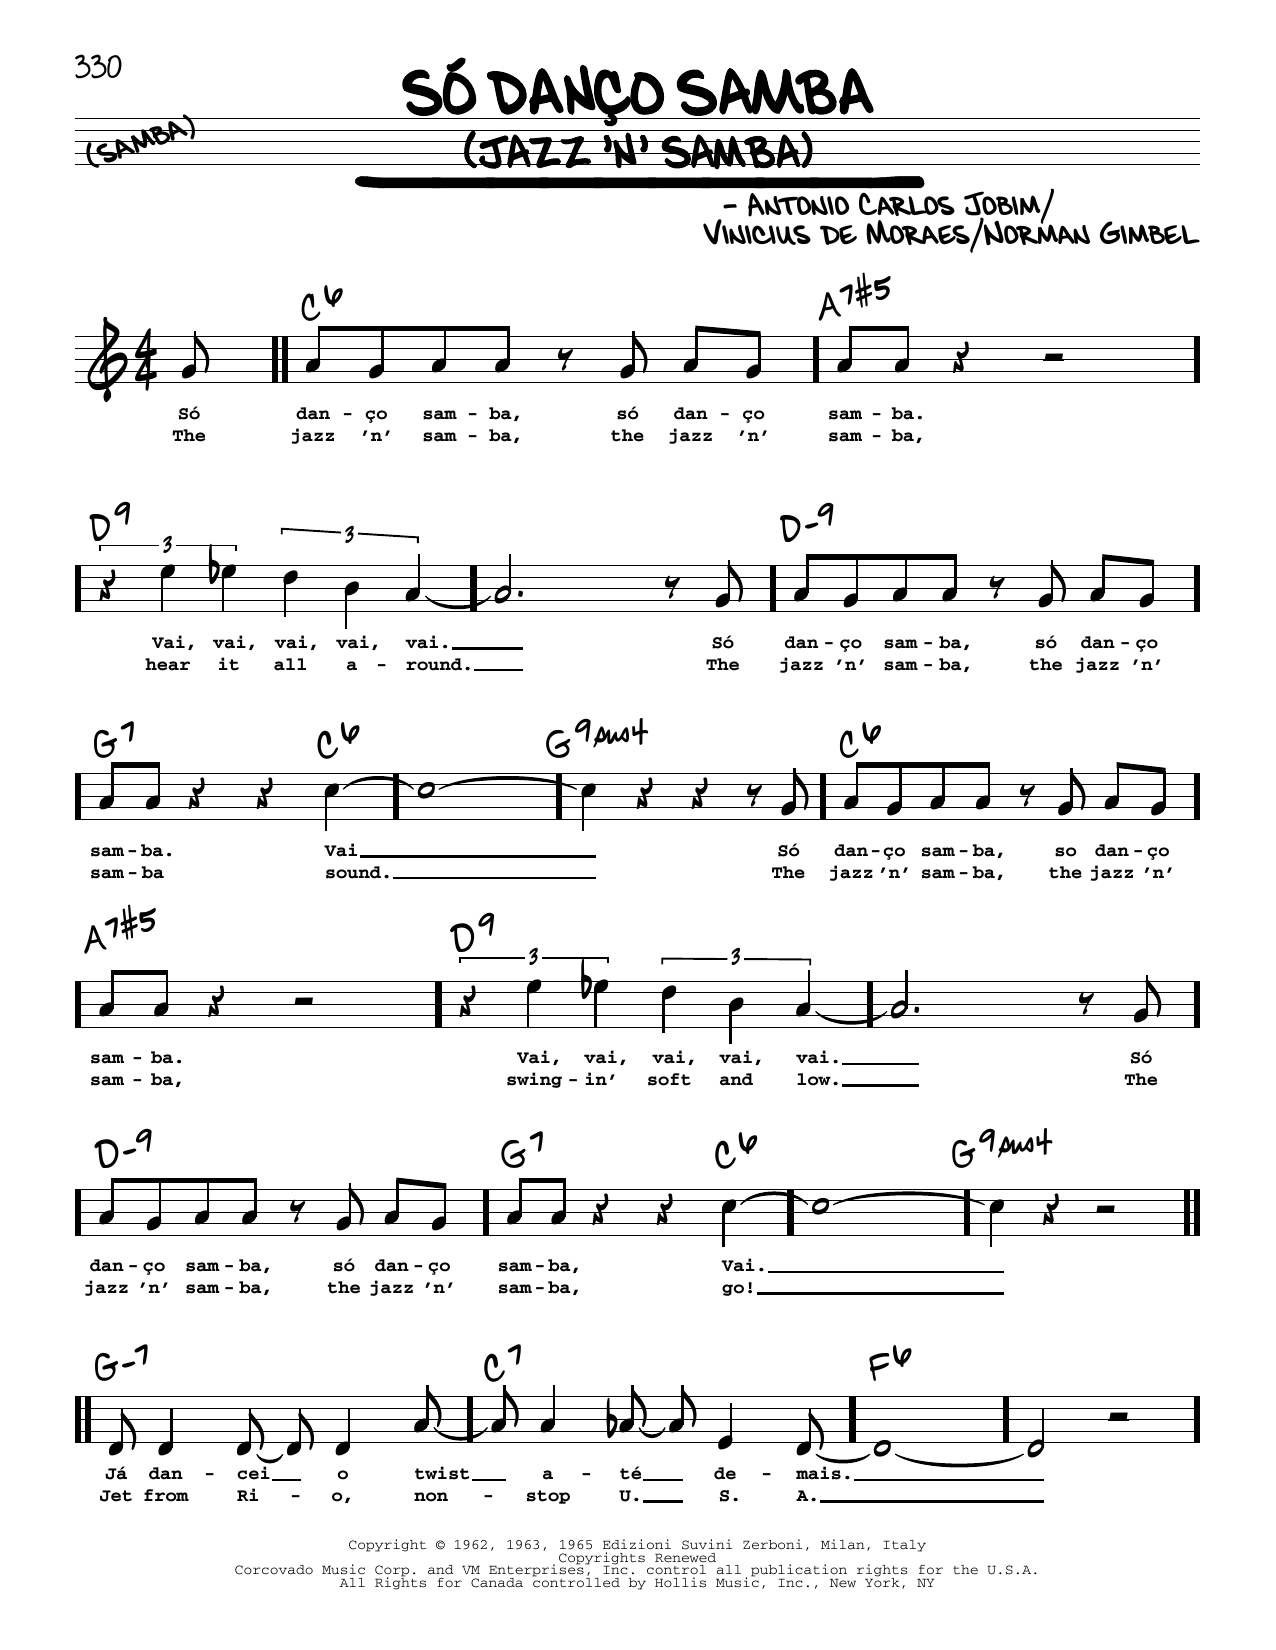 Antonio Carlos Jobim Jazz 'N' Samba (So Danco Samba) (High Voice) (from Copacabana Palace) Sheet Music Notes & Chords for Real Book – Melody, Lyrics & Chords - Download or Print PDF